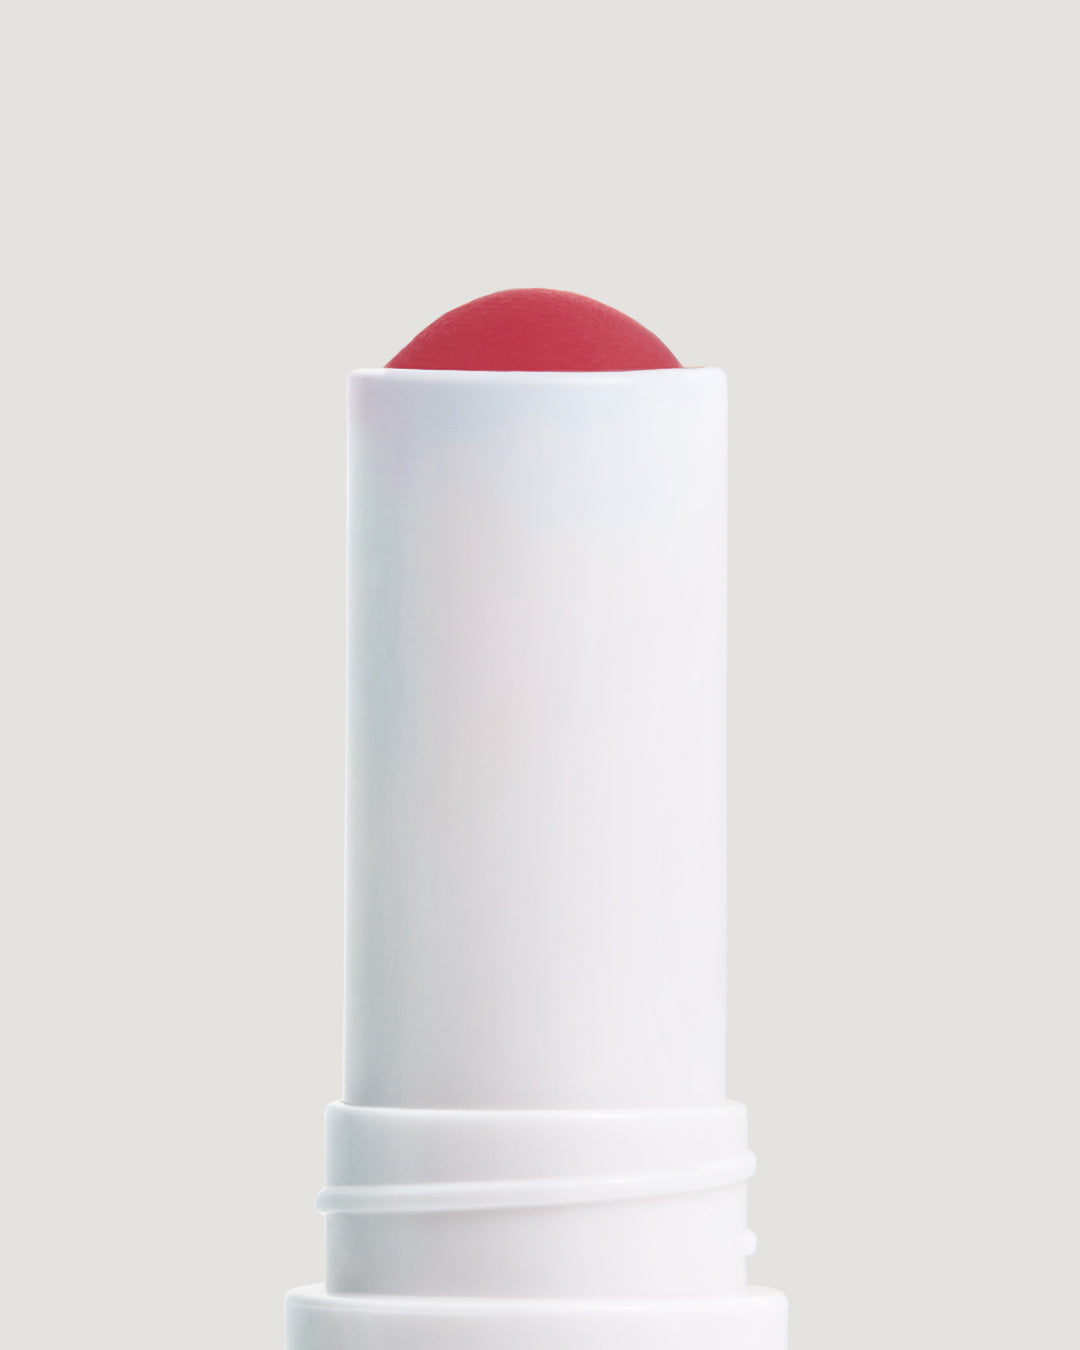 Classic Liplux® Organic Lip Balm Sunscreen SPF 30 - Tinted